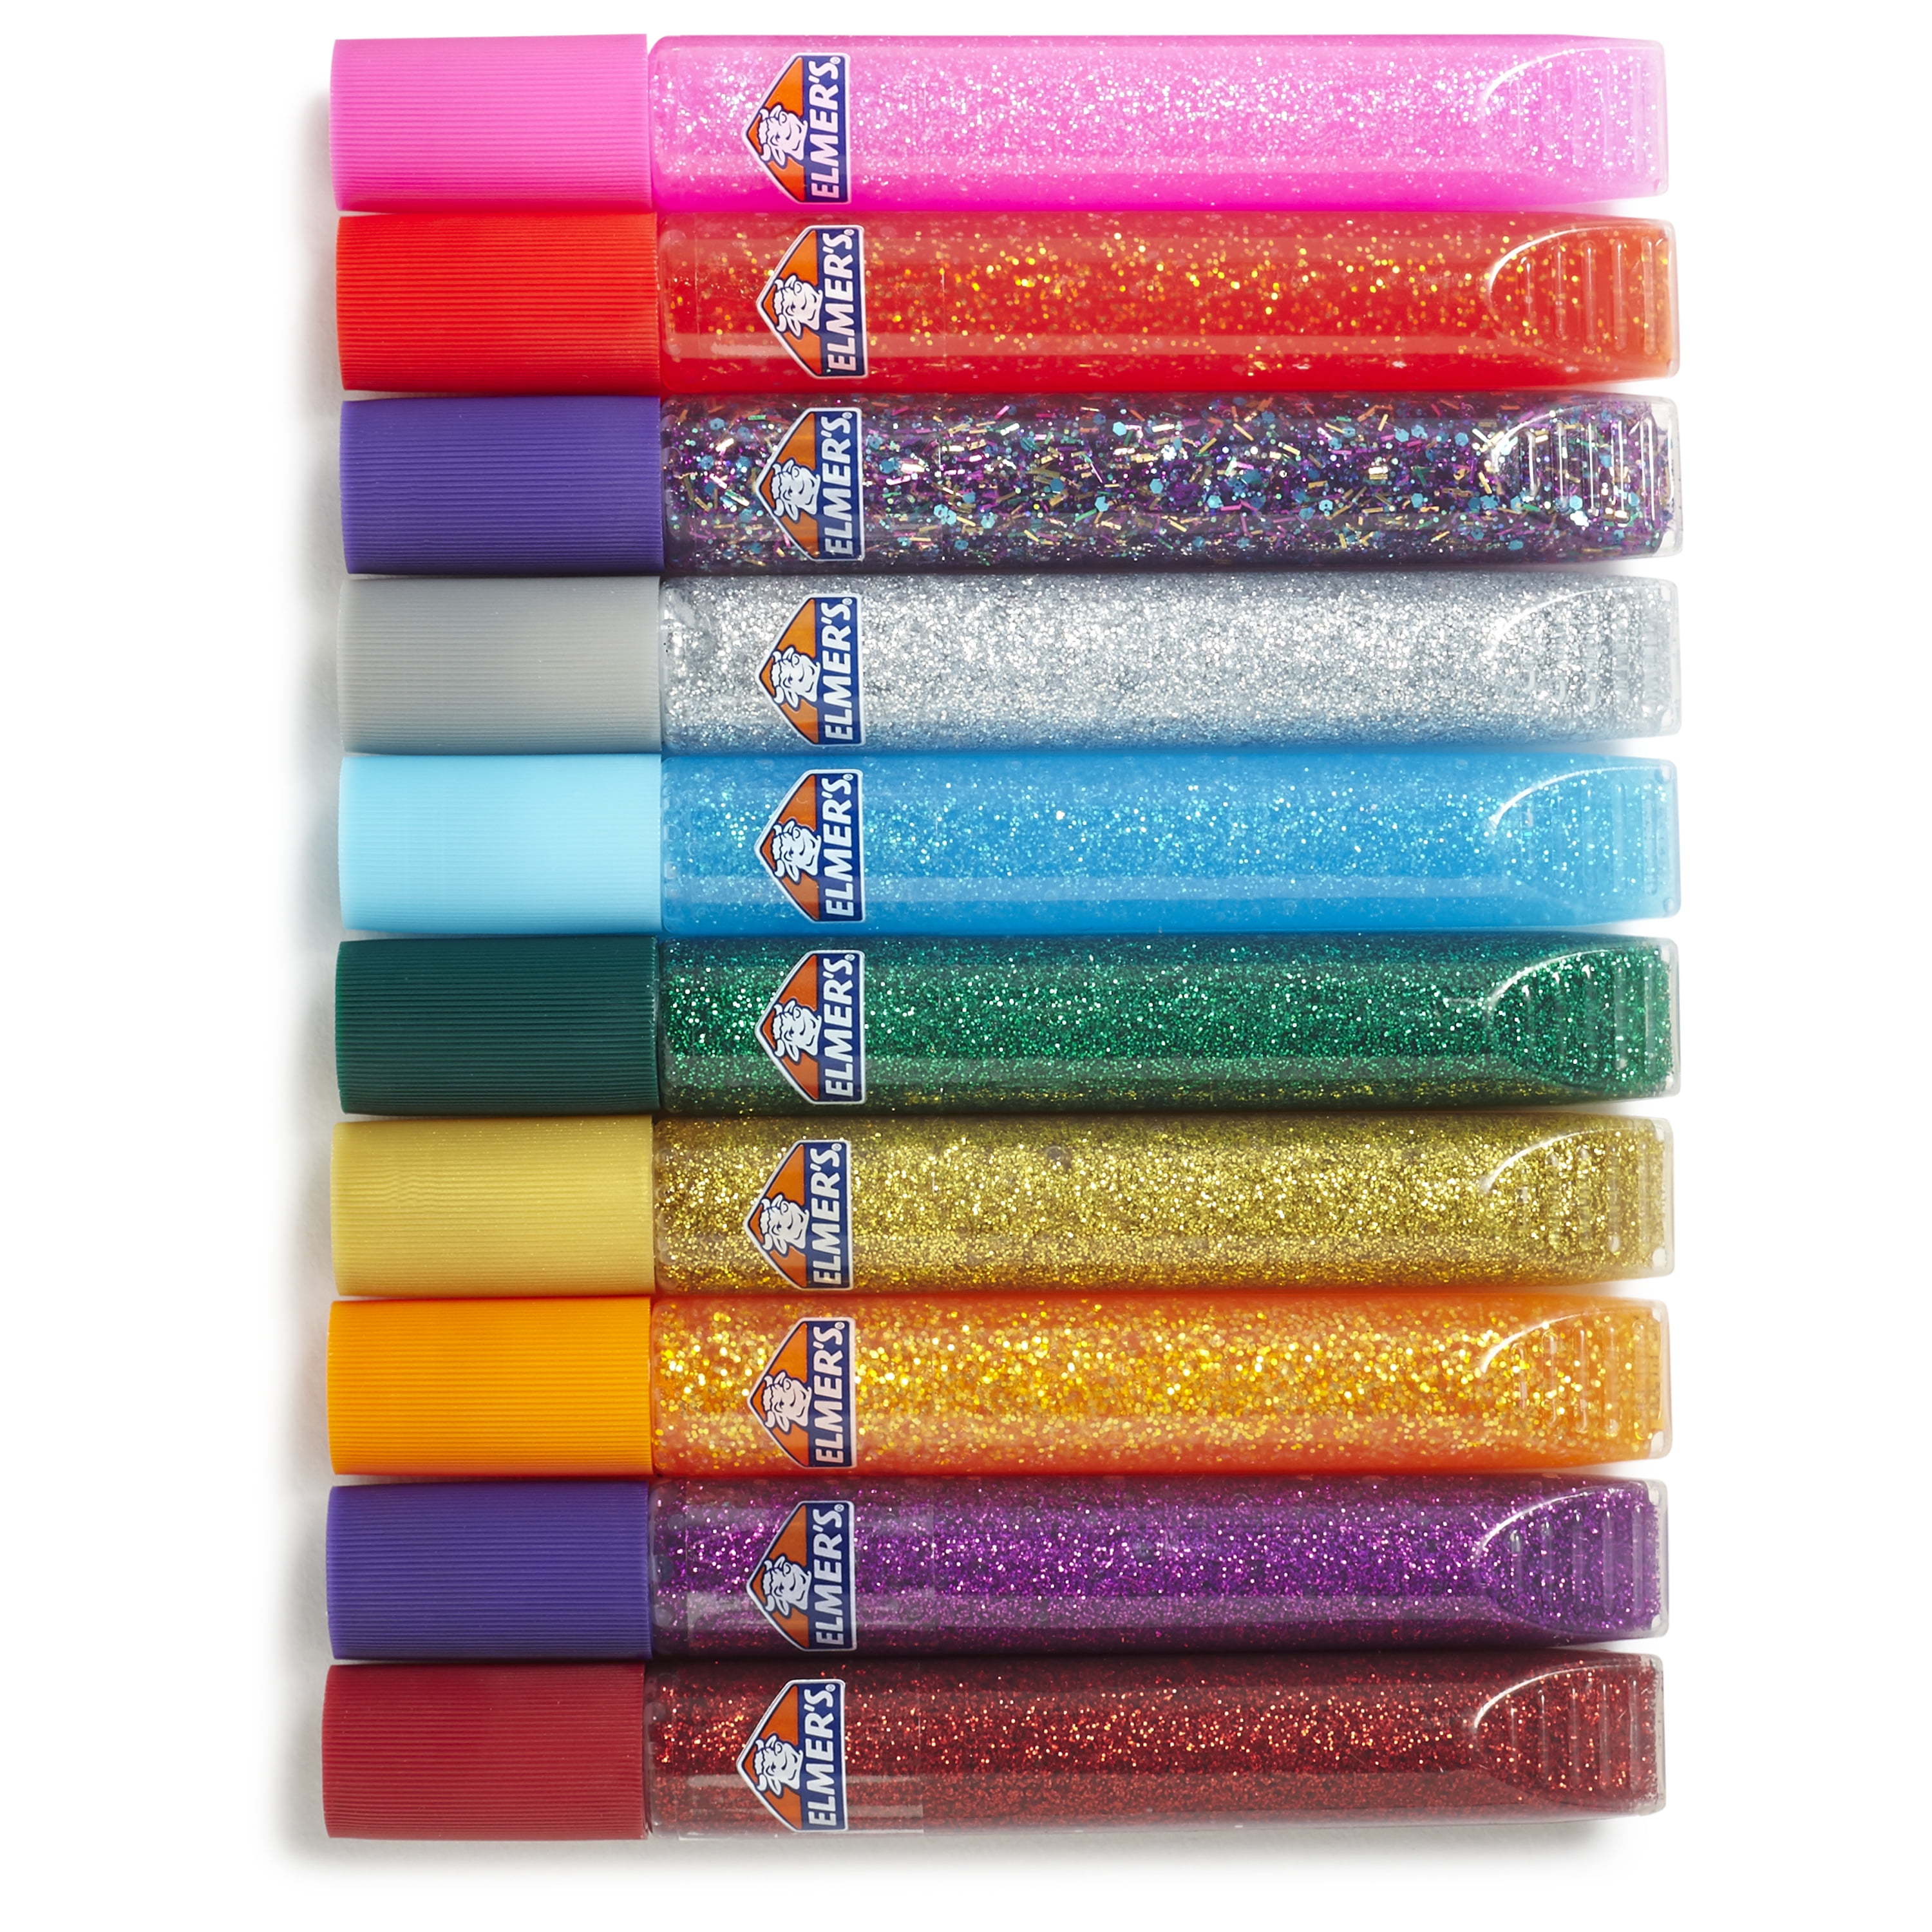  Elmer's Washable Glitter Glue Pens, Pack of 5 Pens, Bright  Confetti Glitter Colors (E653) : Arts, Crafts & Sewing